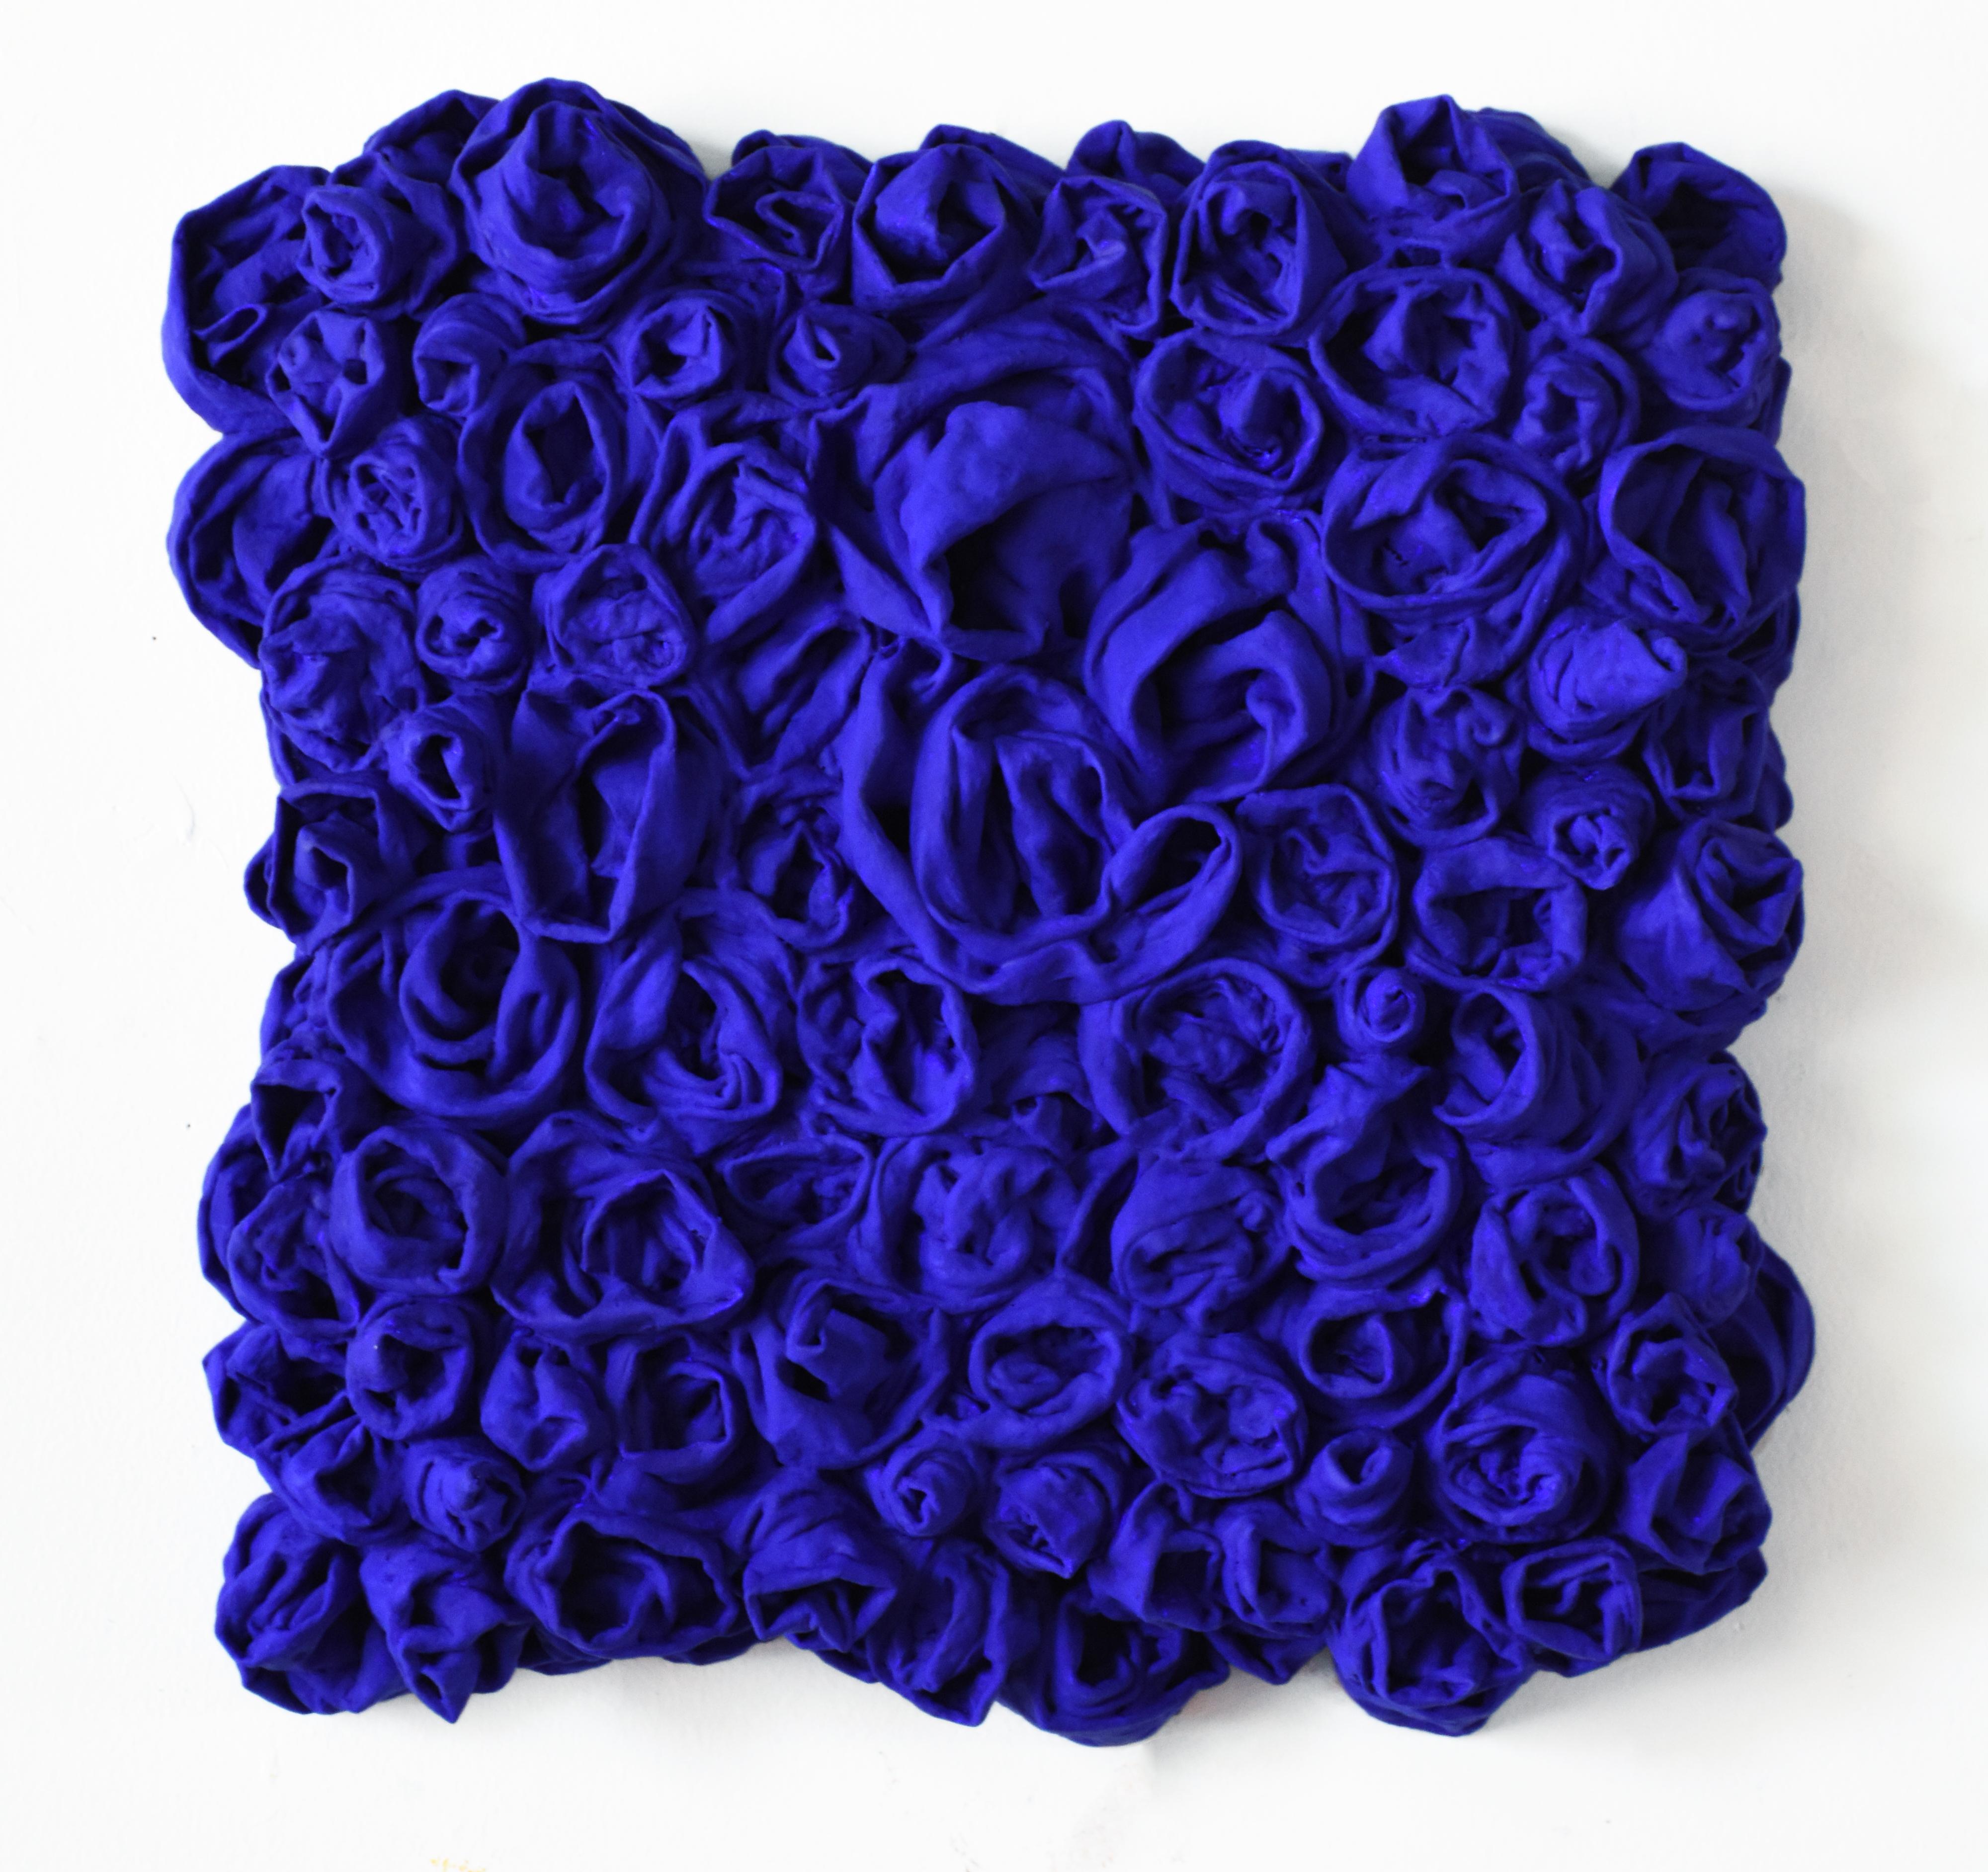 Ultra-Blue Rosettes - Sculpture by Chloe Hedden